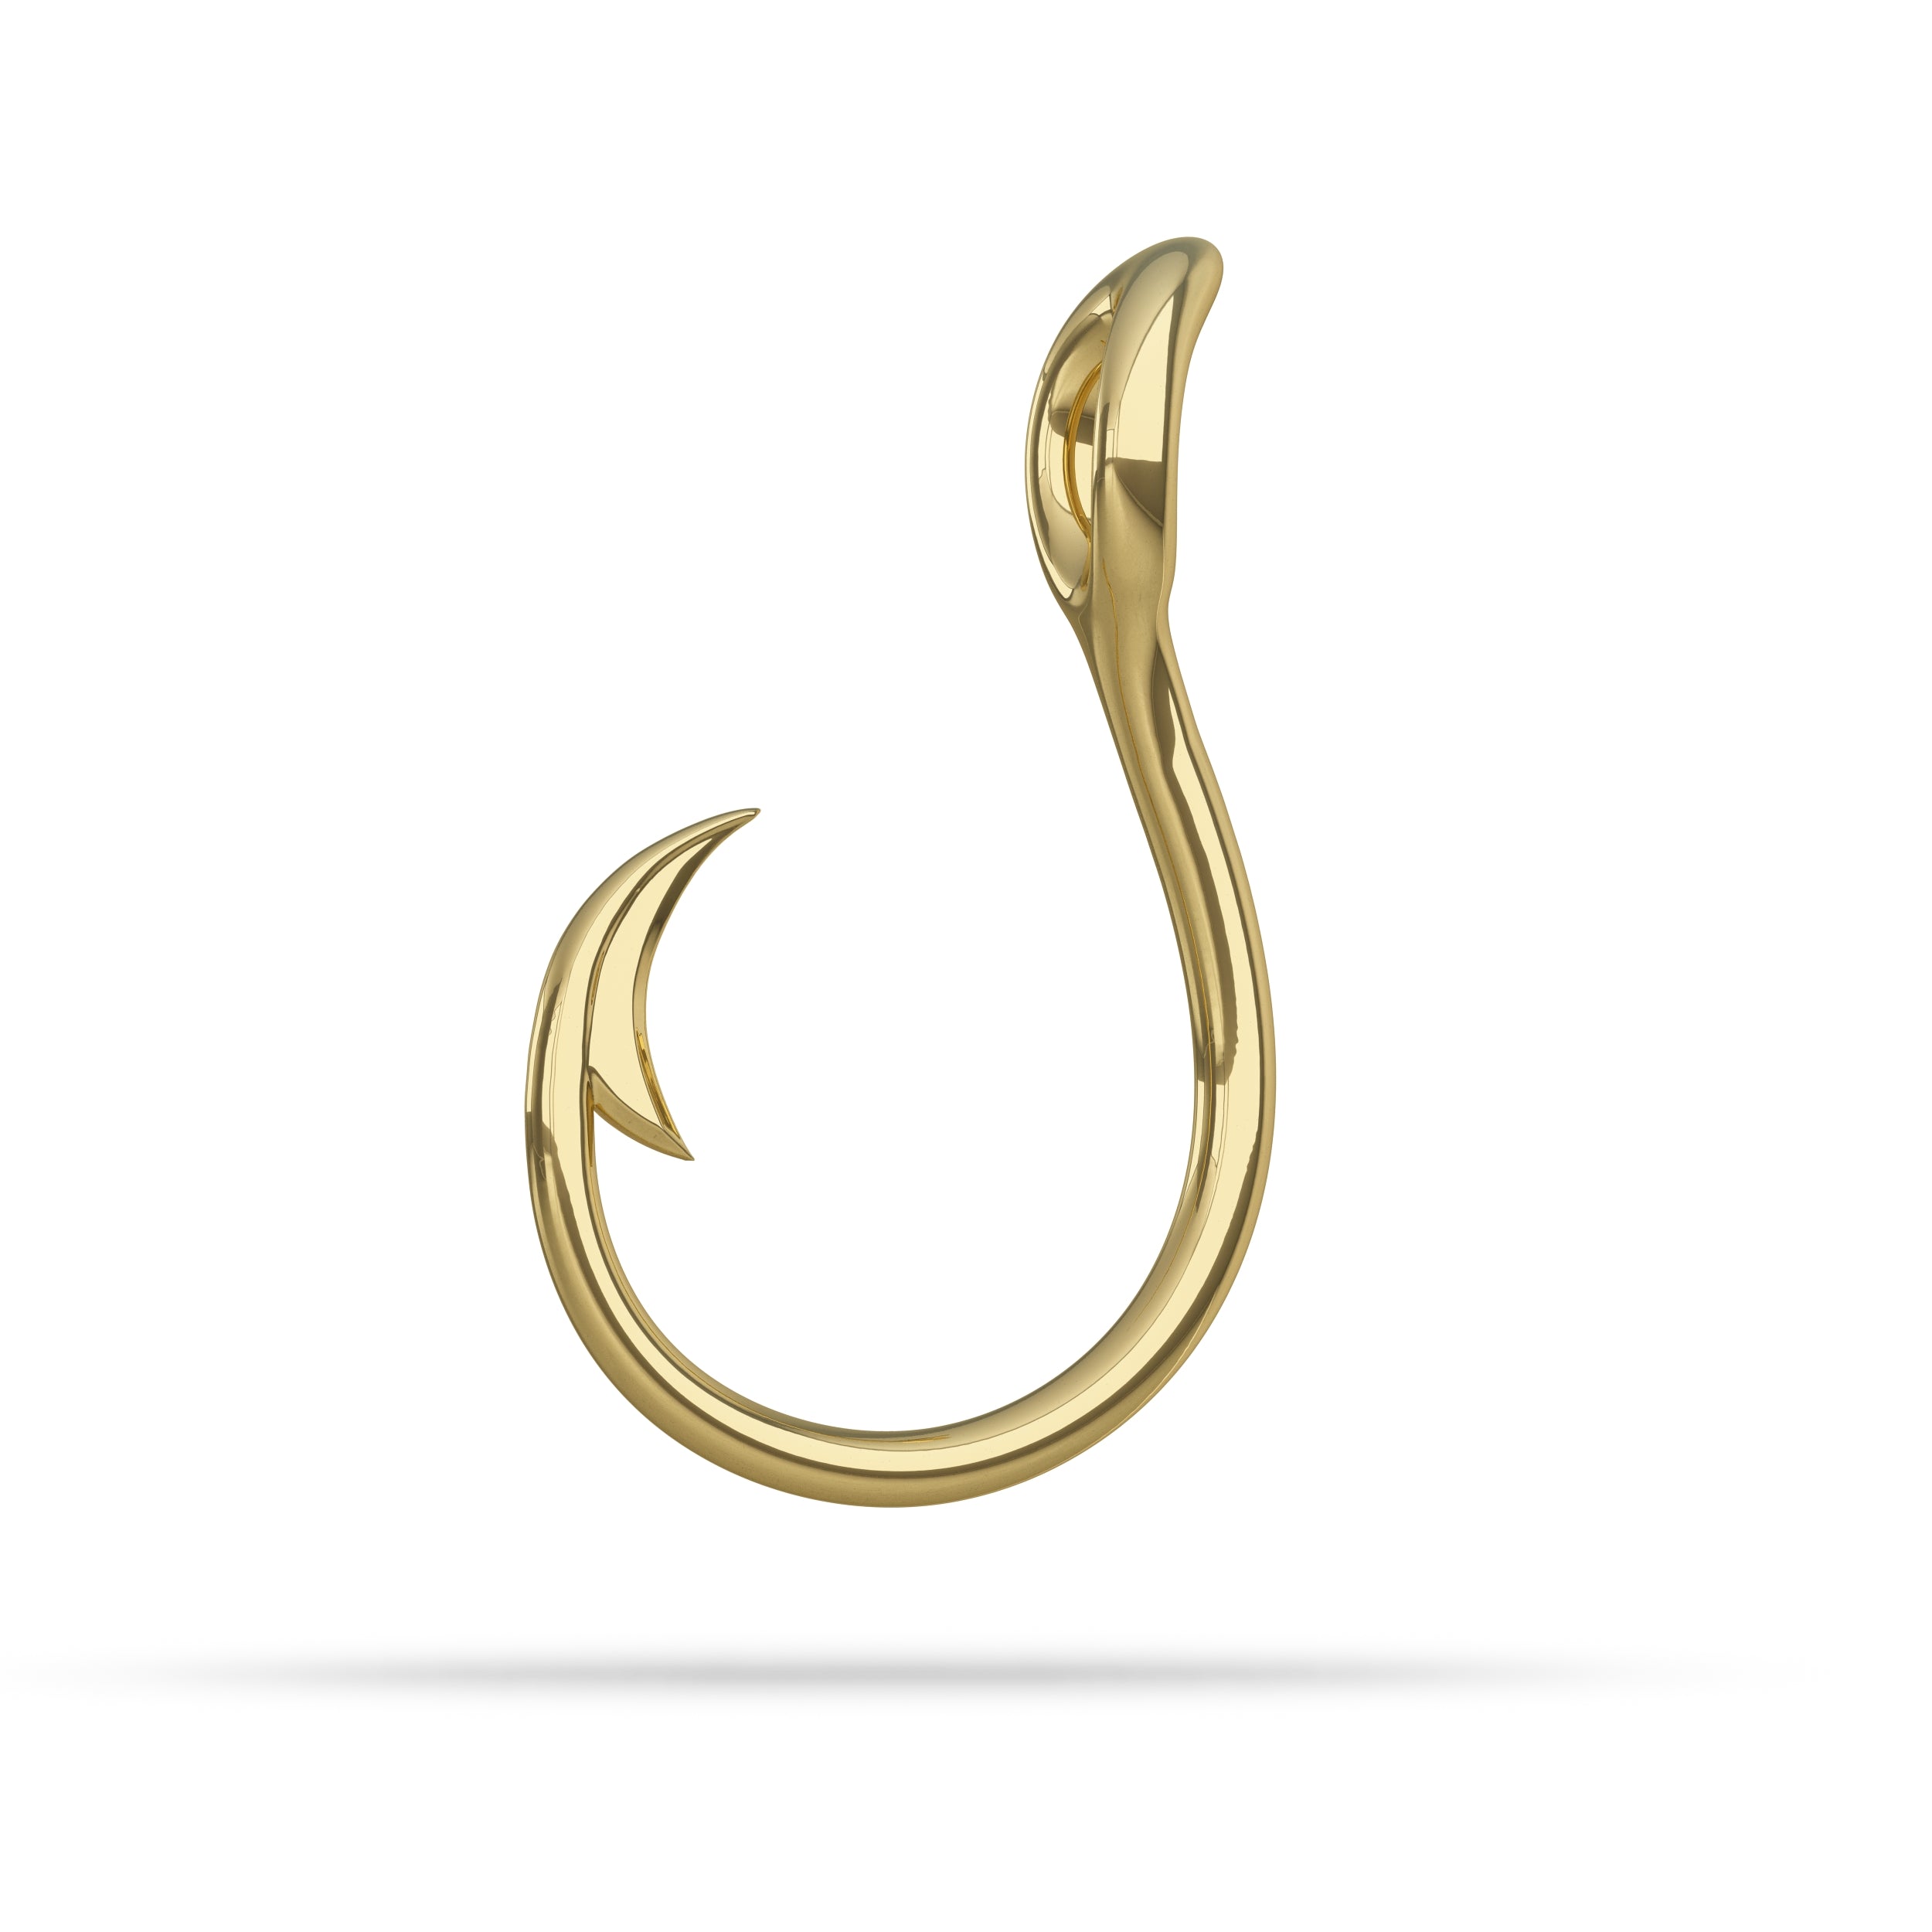 Medium Gold fishing Circle hook pendant by Nautical Treasure